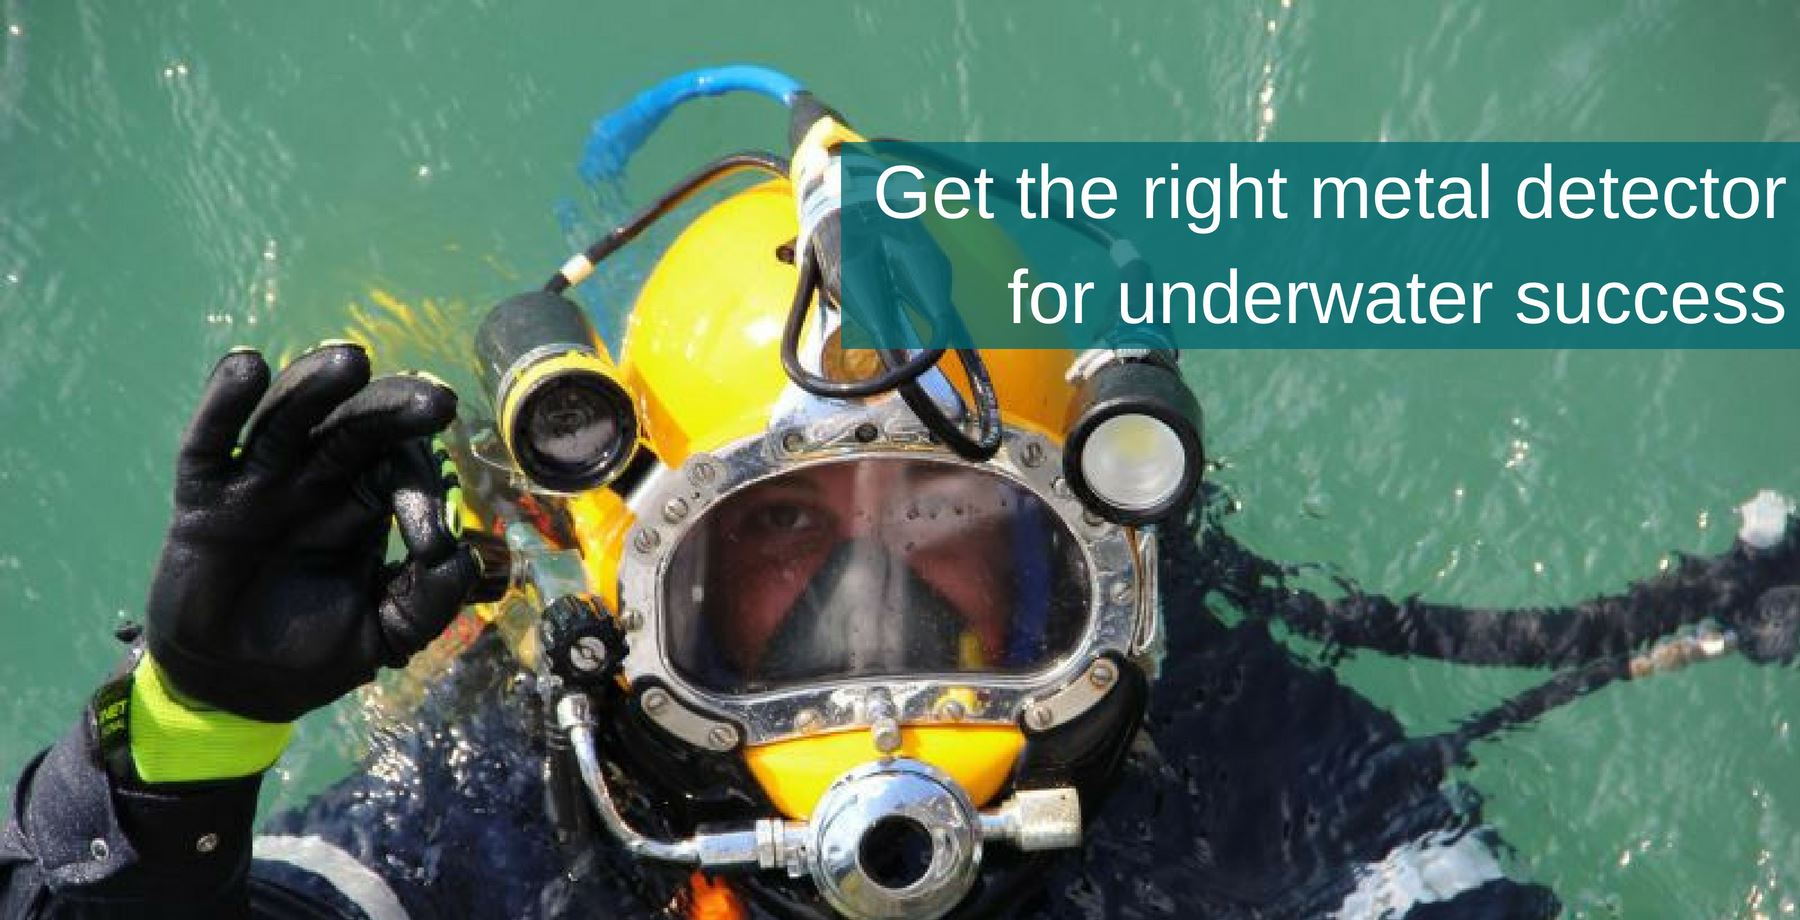 Best underwater metal detector